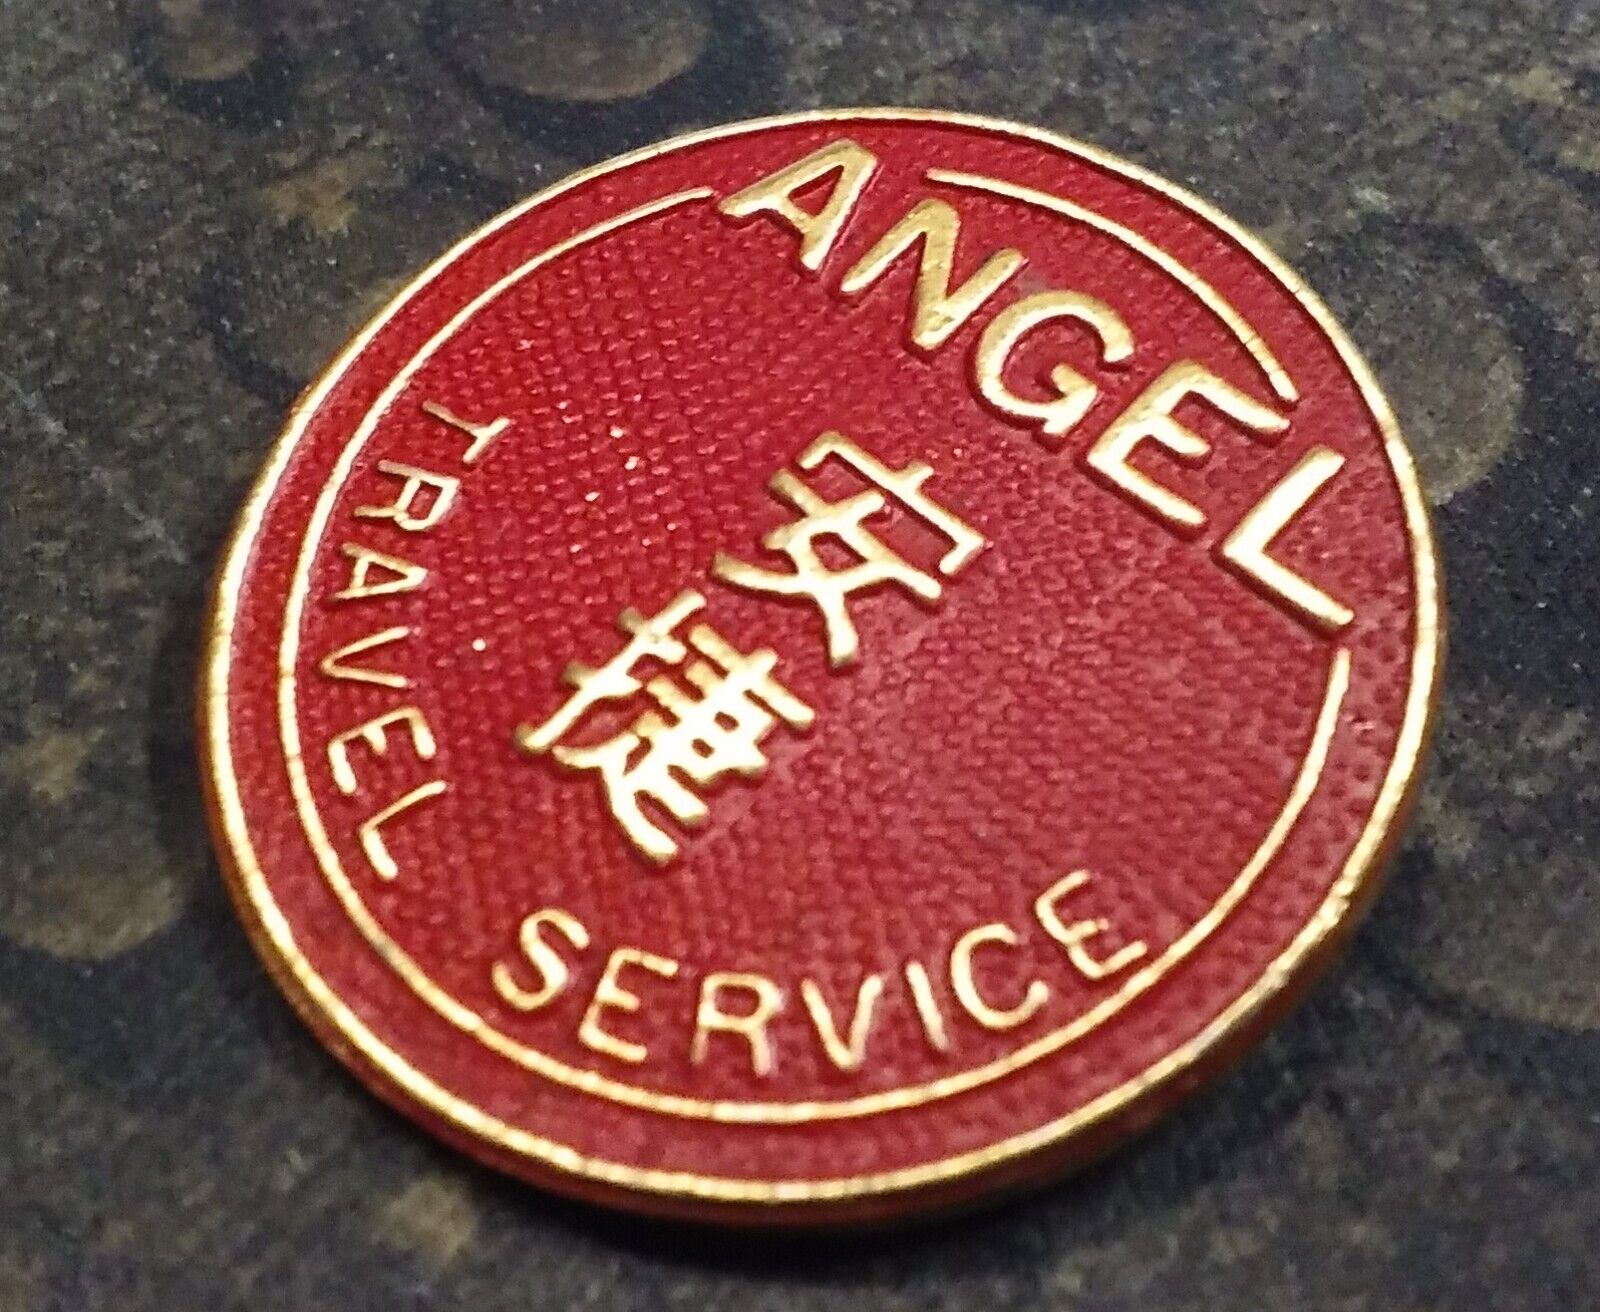 Angel Travel Service vintage pin badge